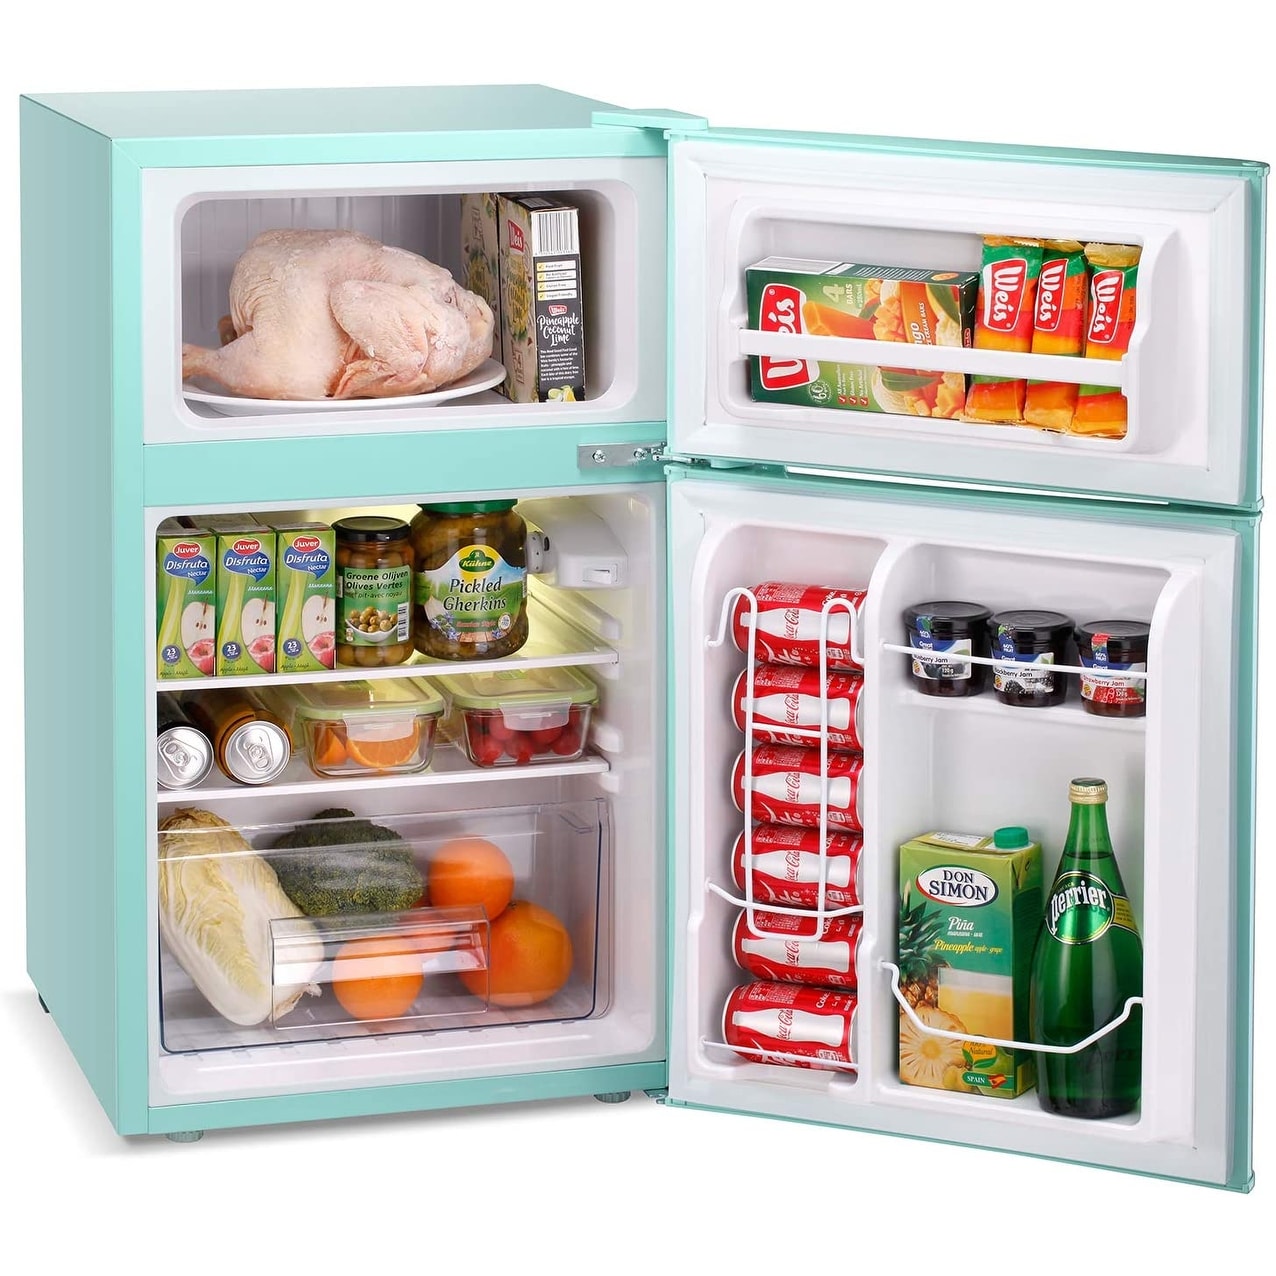 https://ak1.ostkcdn.com/images/products/is/images/direct/5f18a3172efb5f3015c1164a5fbb360213d77ebd/3.2-CU-FT-Compact-Mini-Refrigerator-Separate-Freezer%2C-Small-Fridge.jpg